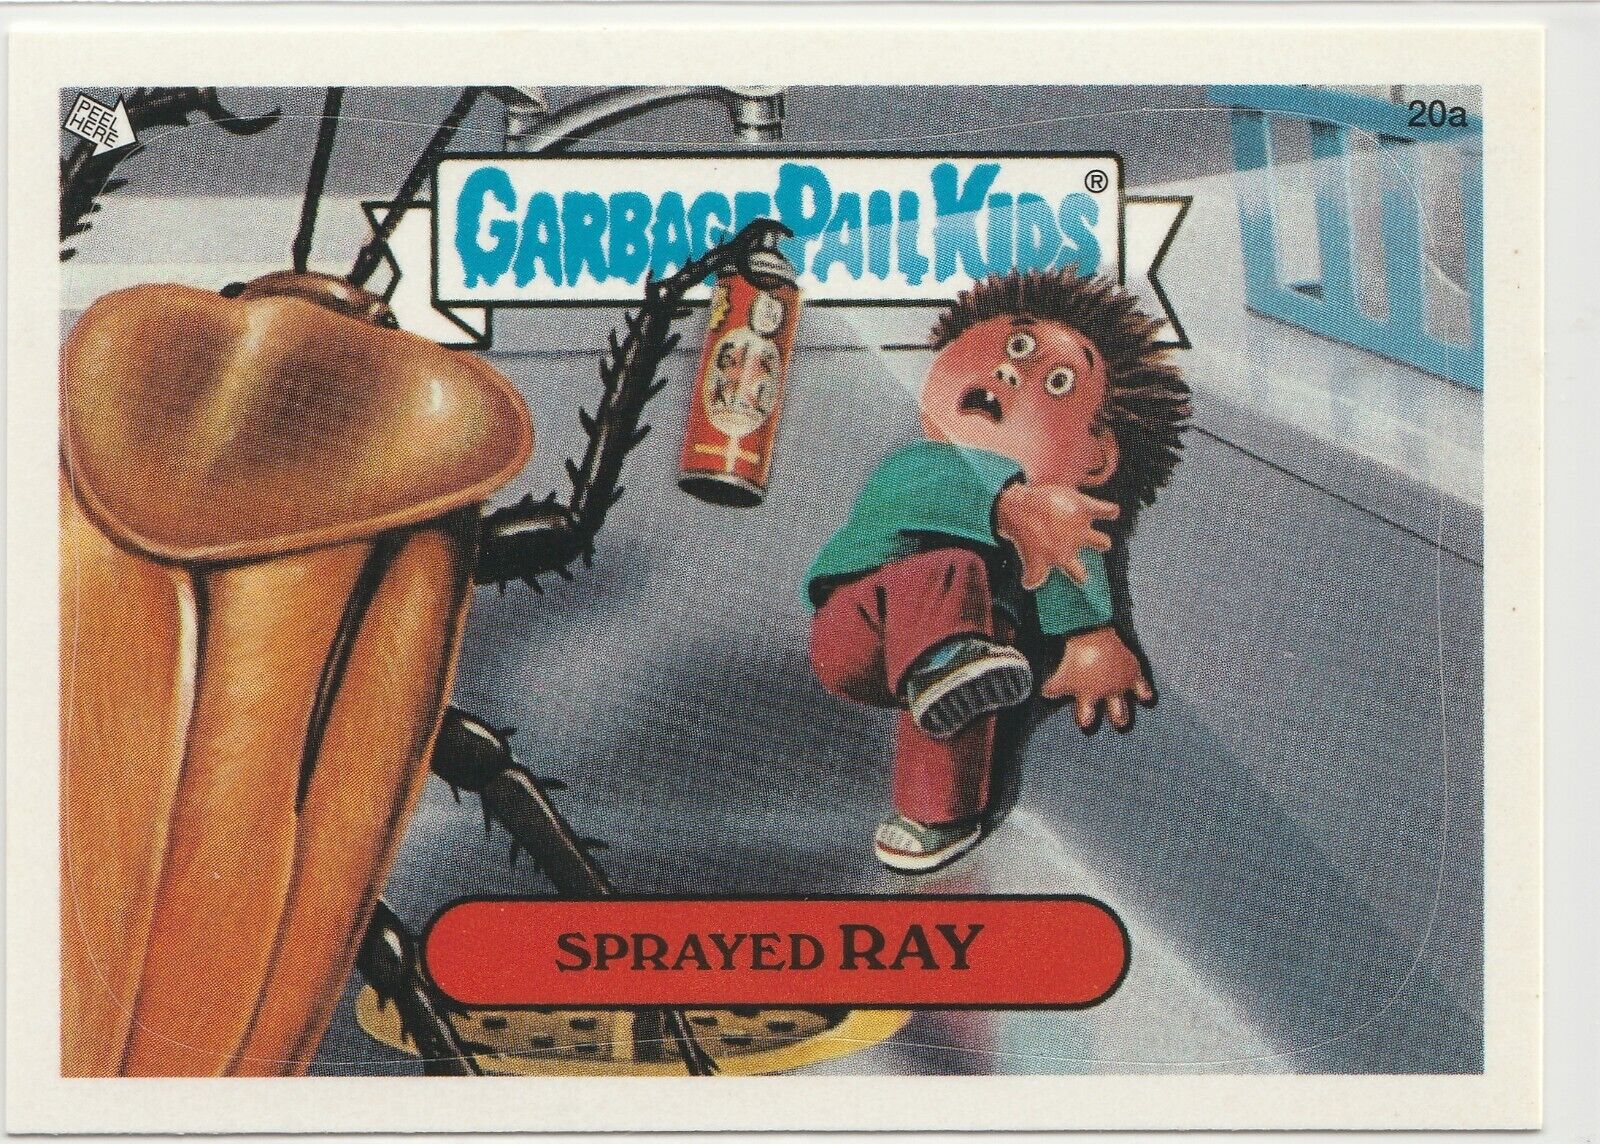 2003 Topps Garbage Pail Kids All-New Series 1 Sprayed Ray 20a GPK die cut